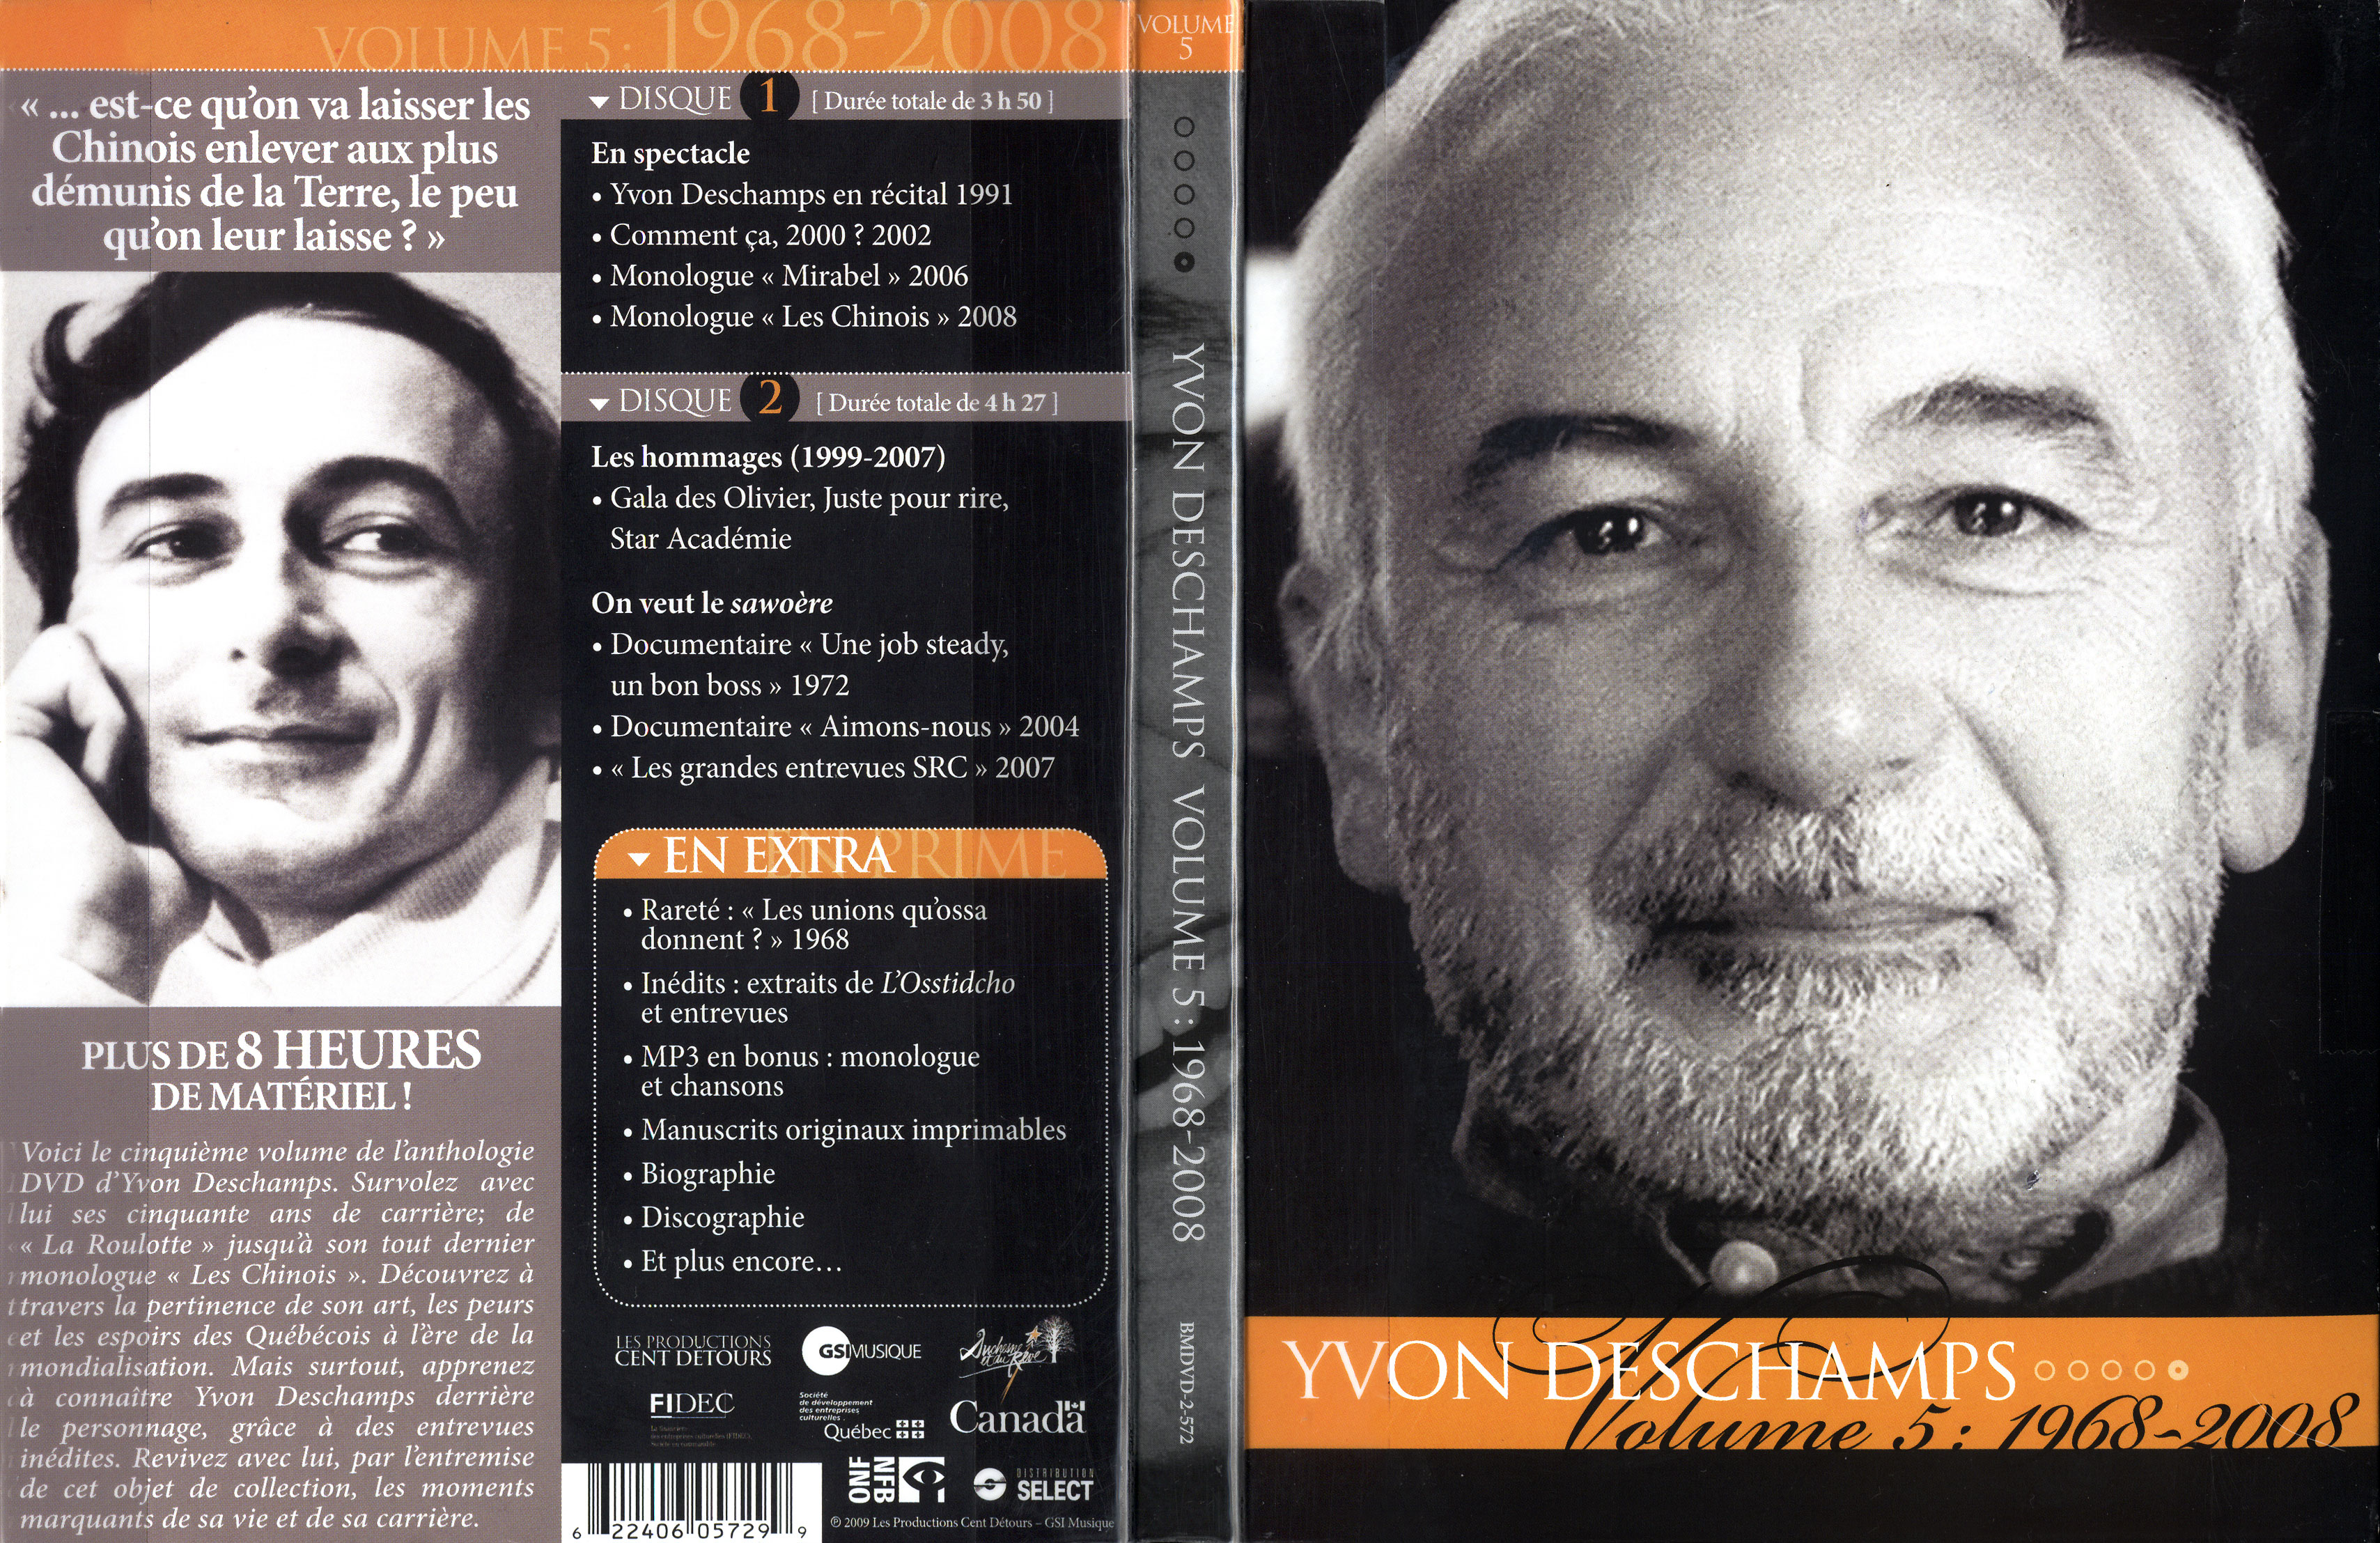 Jaquette DVD Yvon Deschamps vol 5